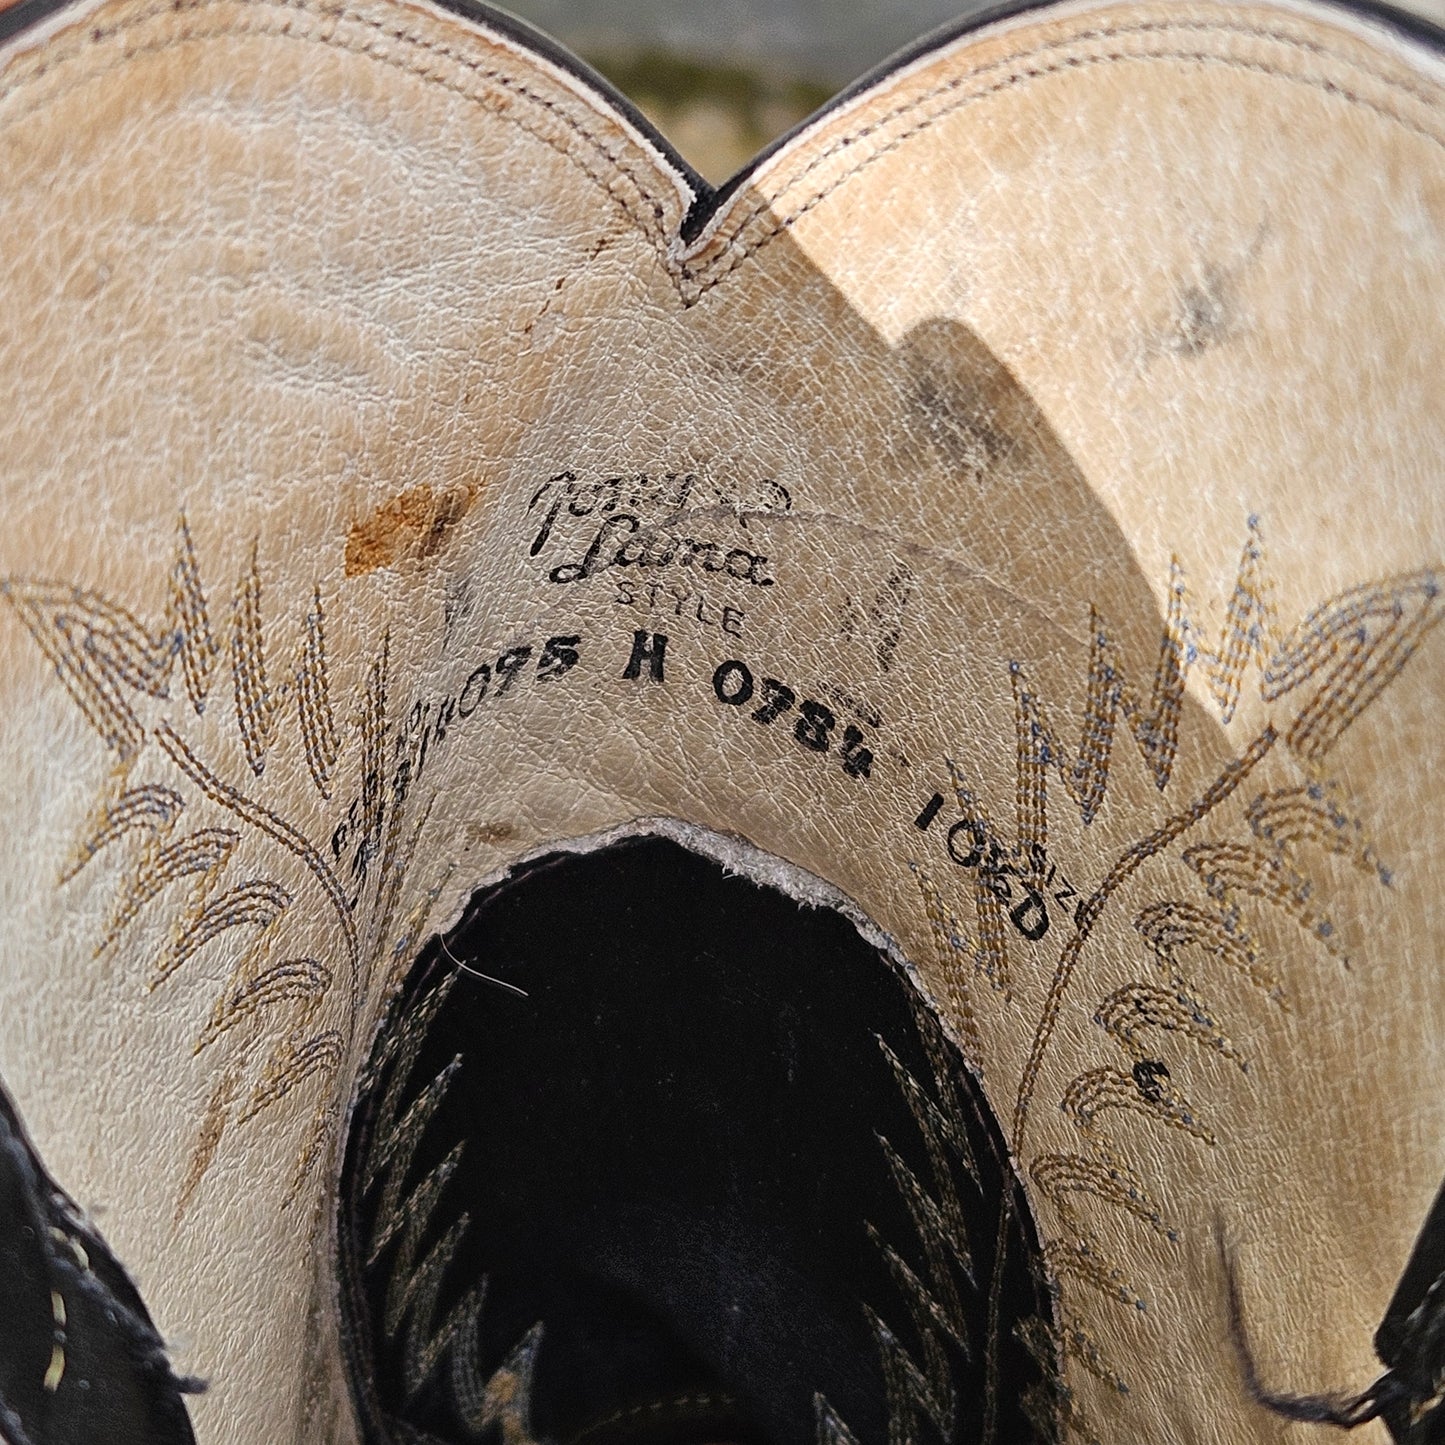 Tony Lama Vintage Cowboy Boots Size 10 1/2 (Men's)